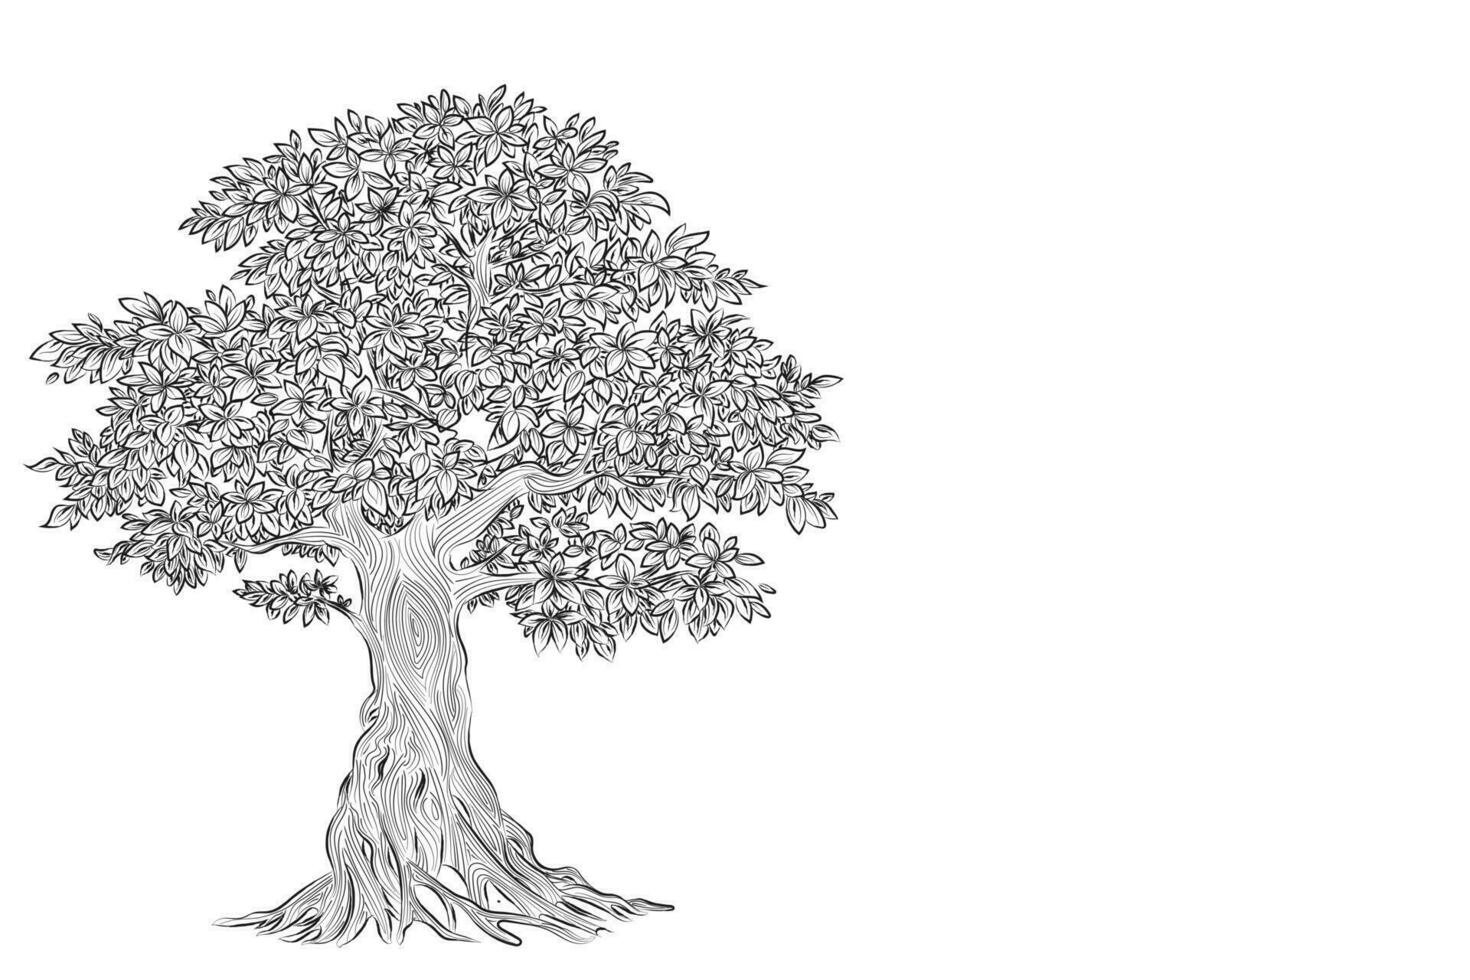 retro estilo naturaleza ilustración con detalles. aceituna árbol trompa. vector